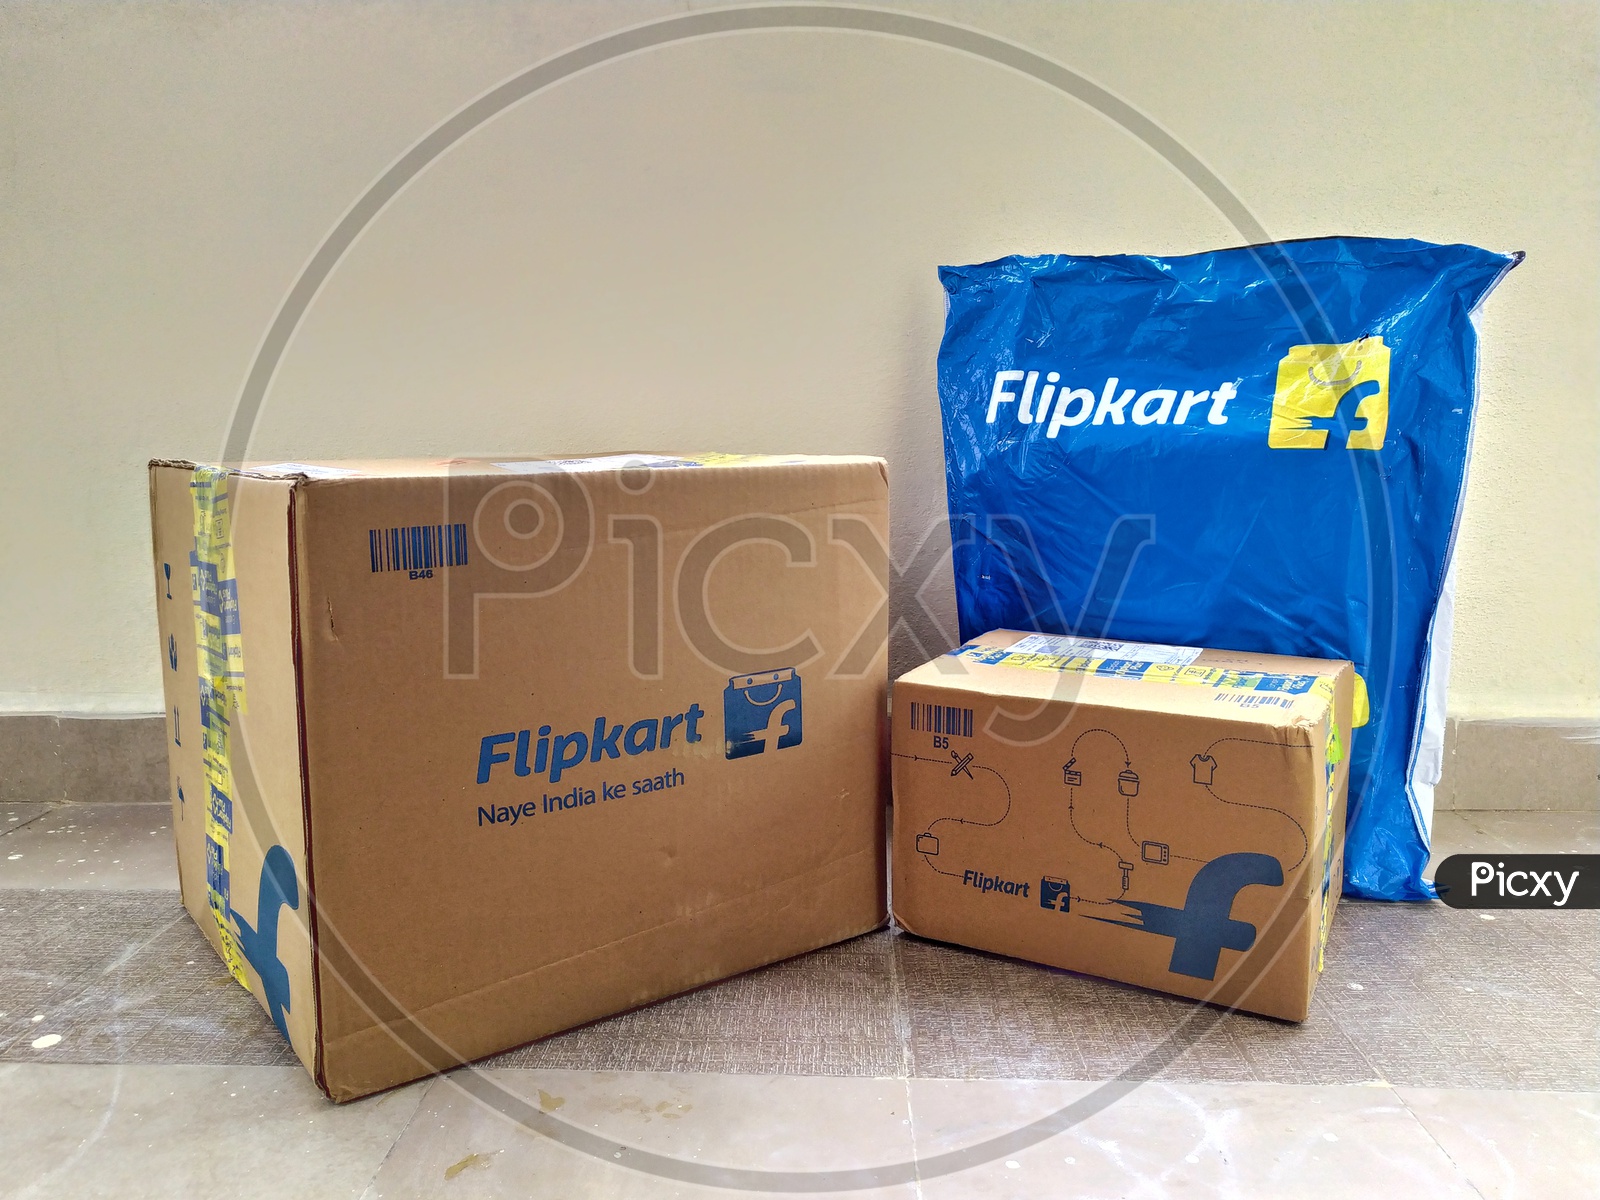 Goods/products ordered from E-commerce Online shopping  website FLIPKART Big Billion days sale